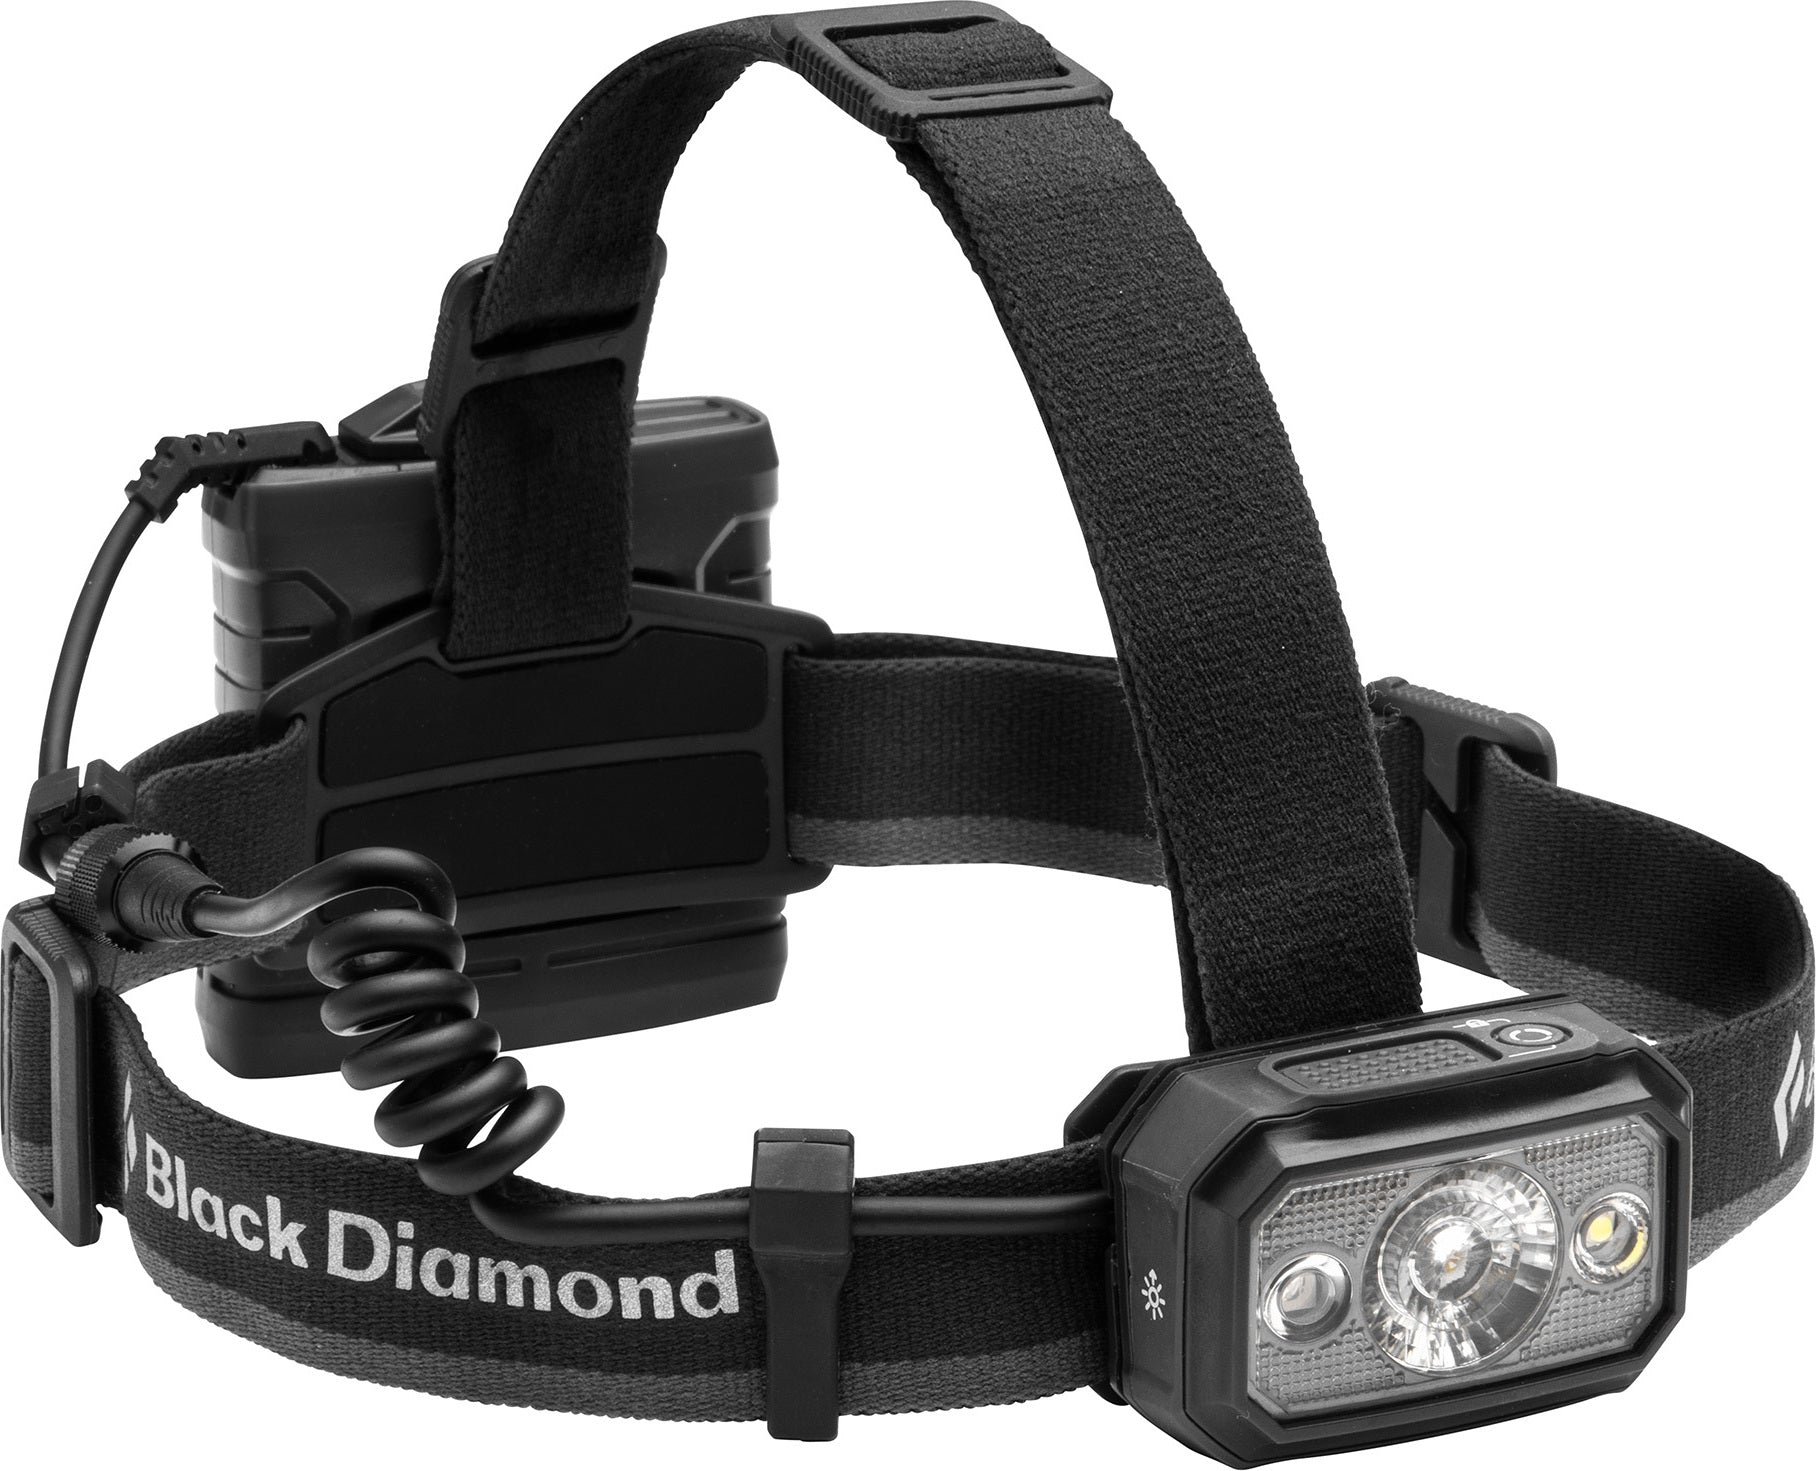 Lampe frontale Black Diamond Sprinter 500 : course à pied, trail